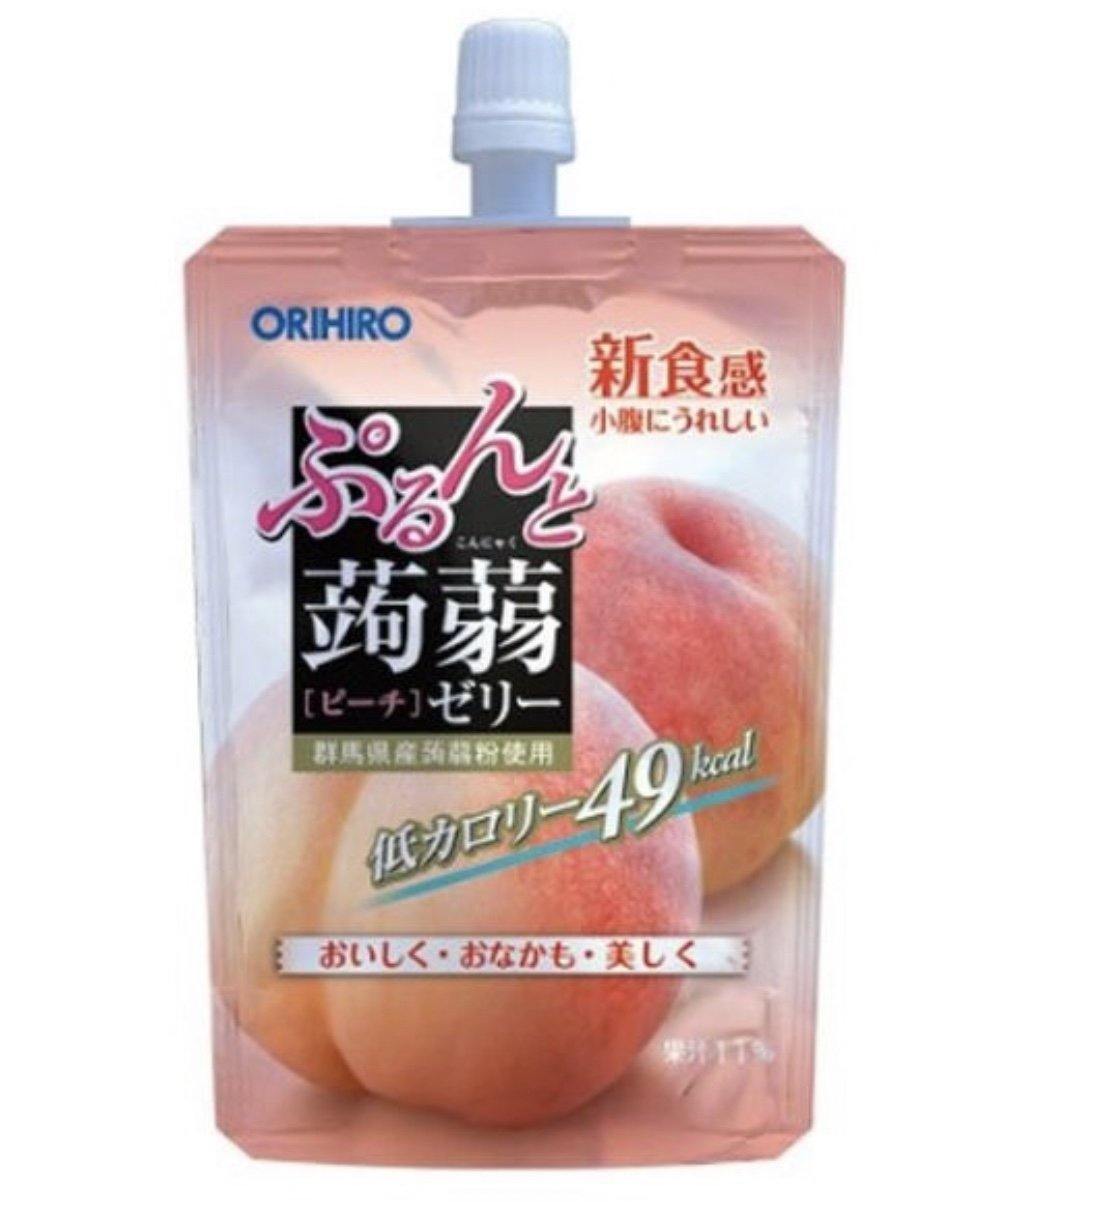 ORIHIRO KONJAC PEACH JELLY 130 ML - Premium Co.  Groceries 